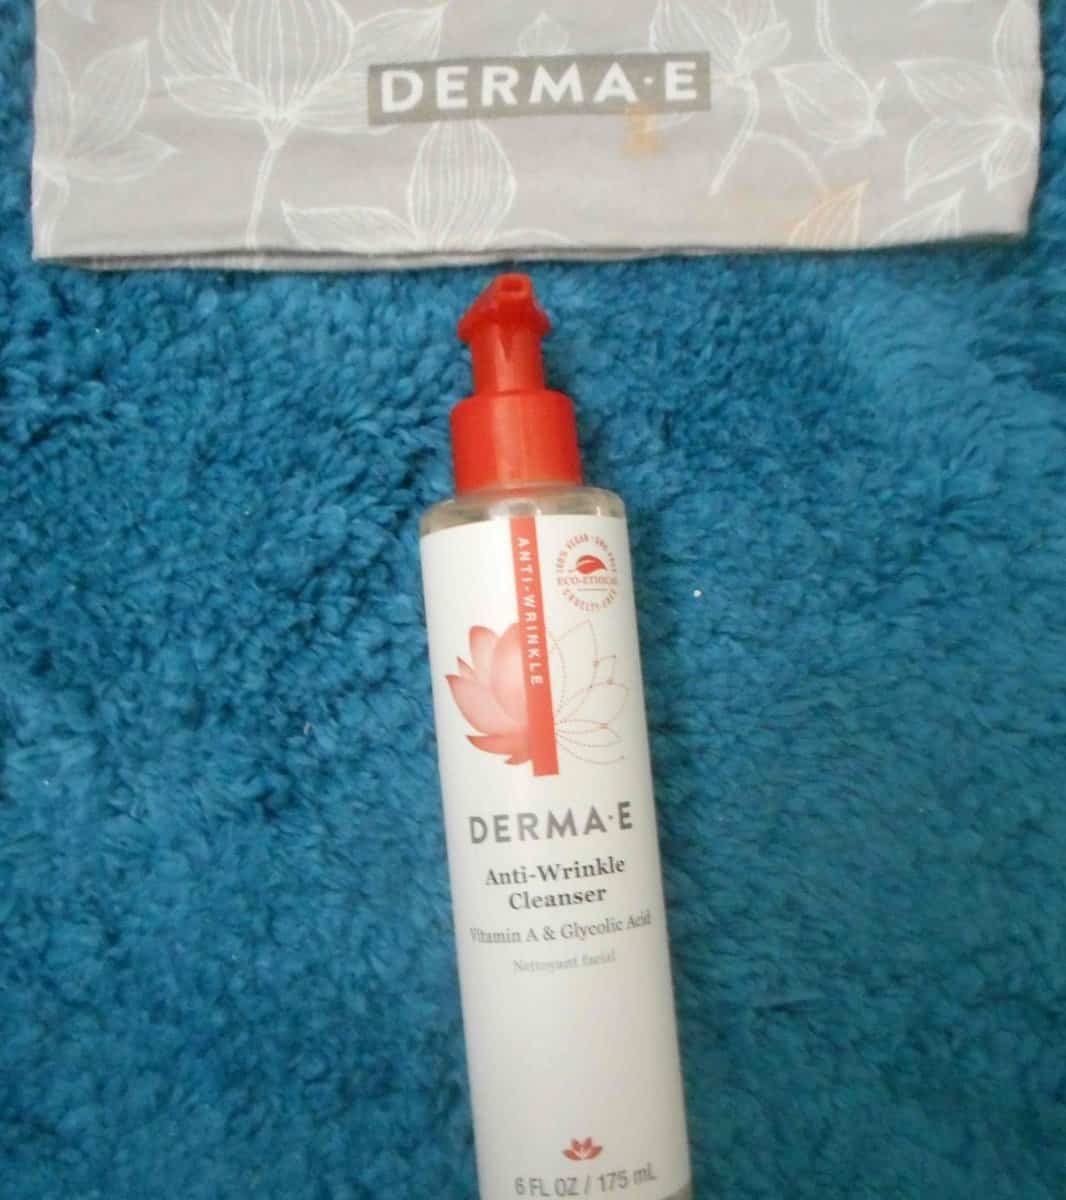 Derma-e anti wrinkle cleanser with derma-e headband